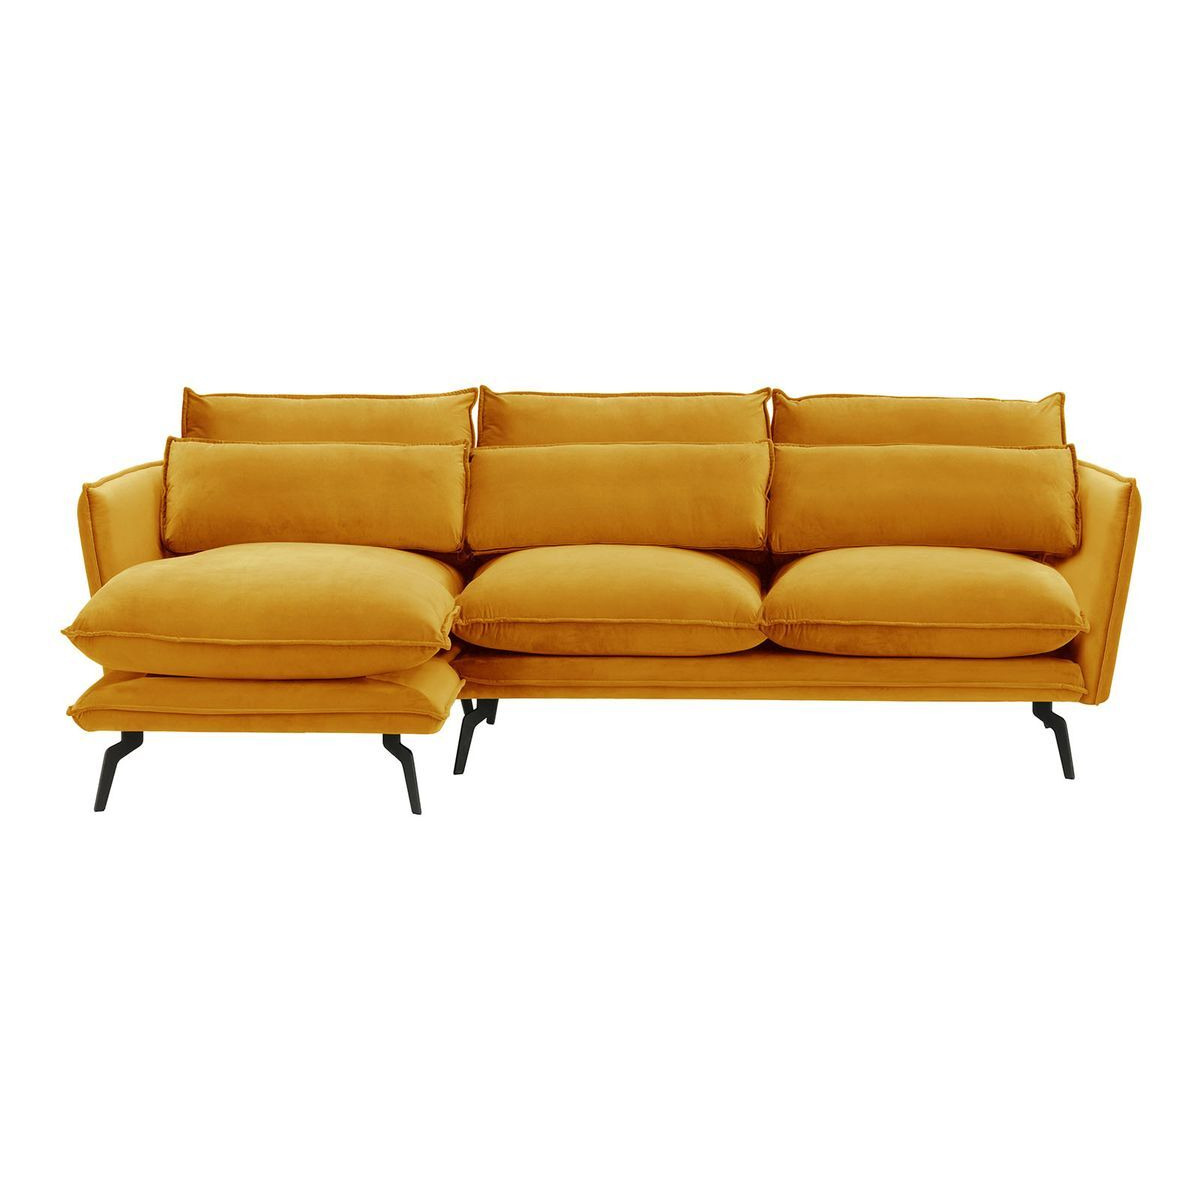 Layla Left Hand Corner Sofa, mustard - image 1